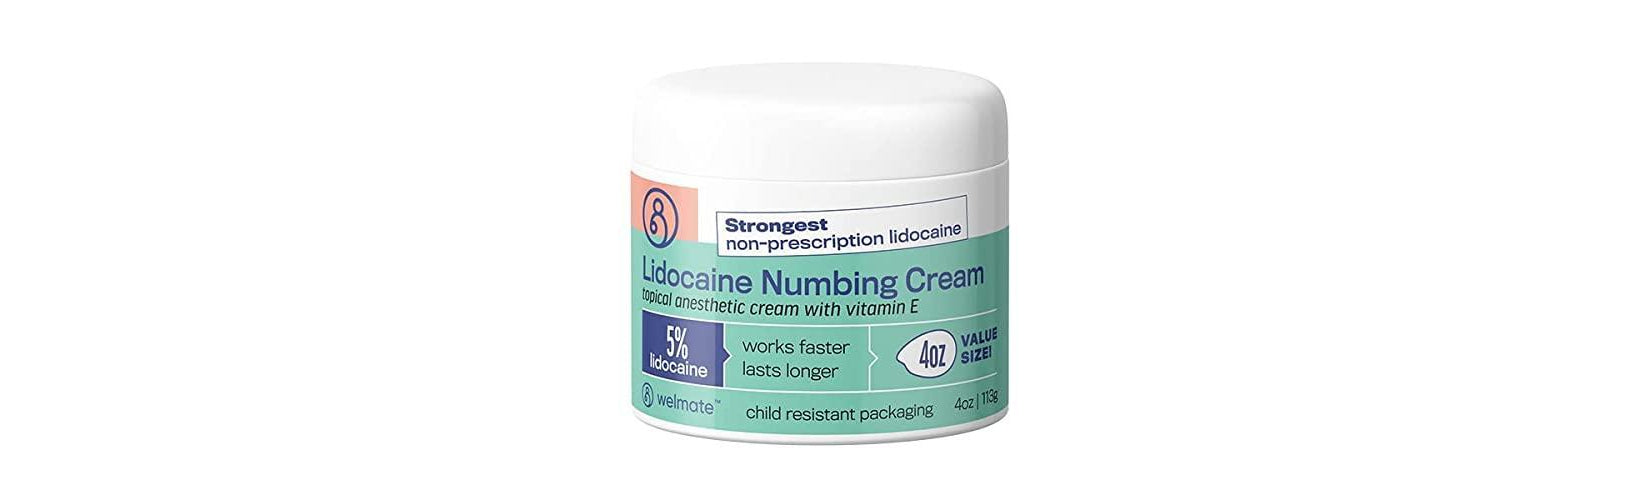 Product Review Welmate Lidocaine 5 Numbing Cream Hemrid 